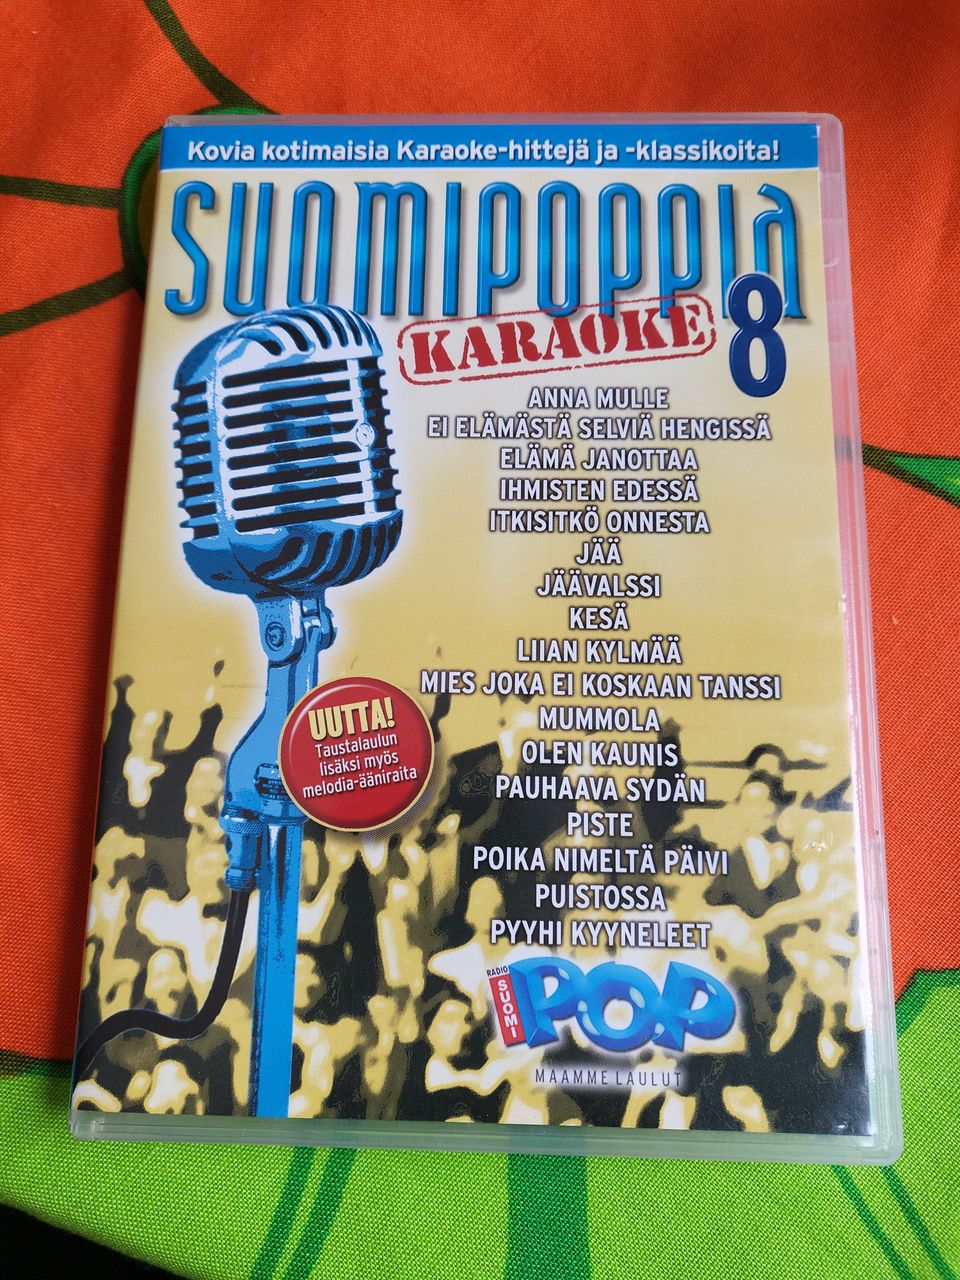 Suomipoppia karaoke 8 DVD